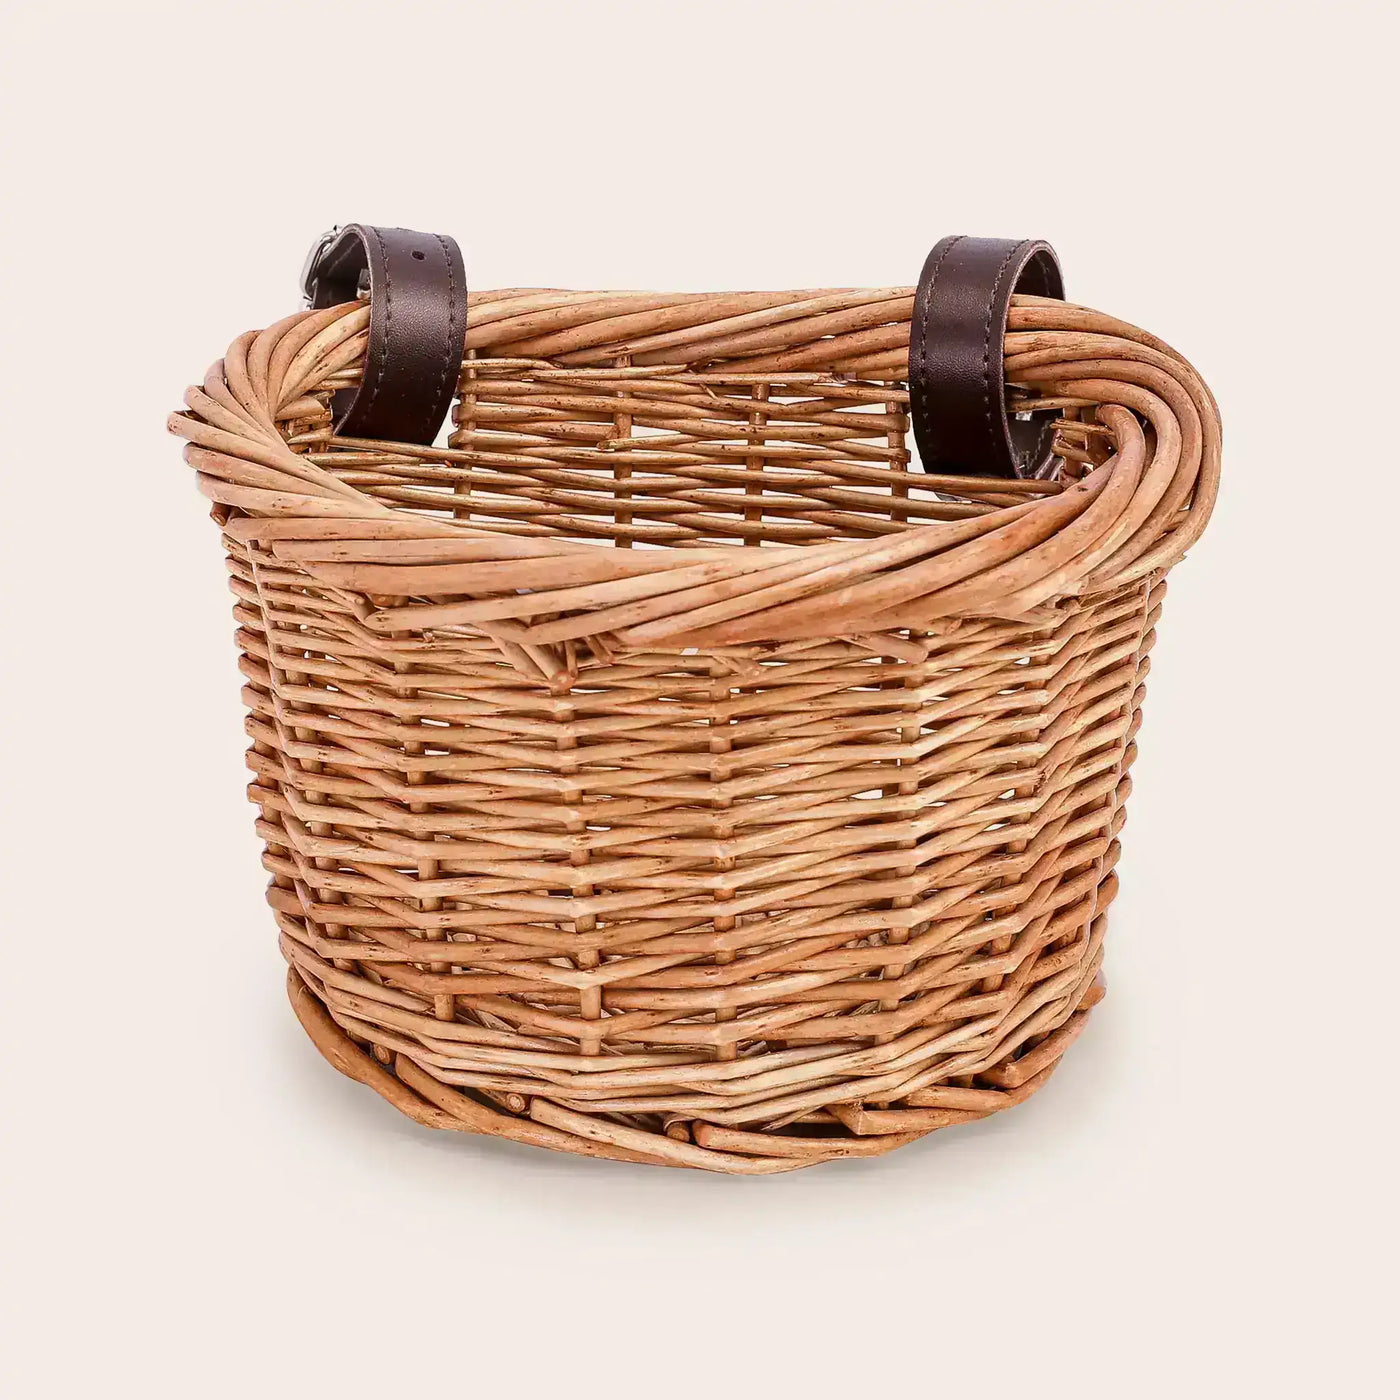 Tiny Land® Balance Bike Basket